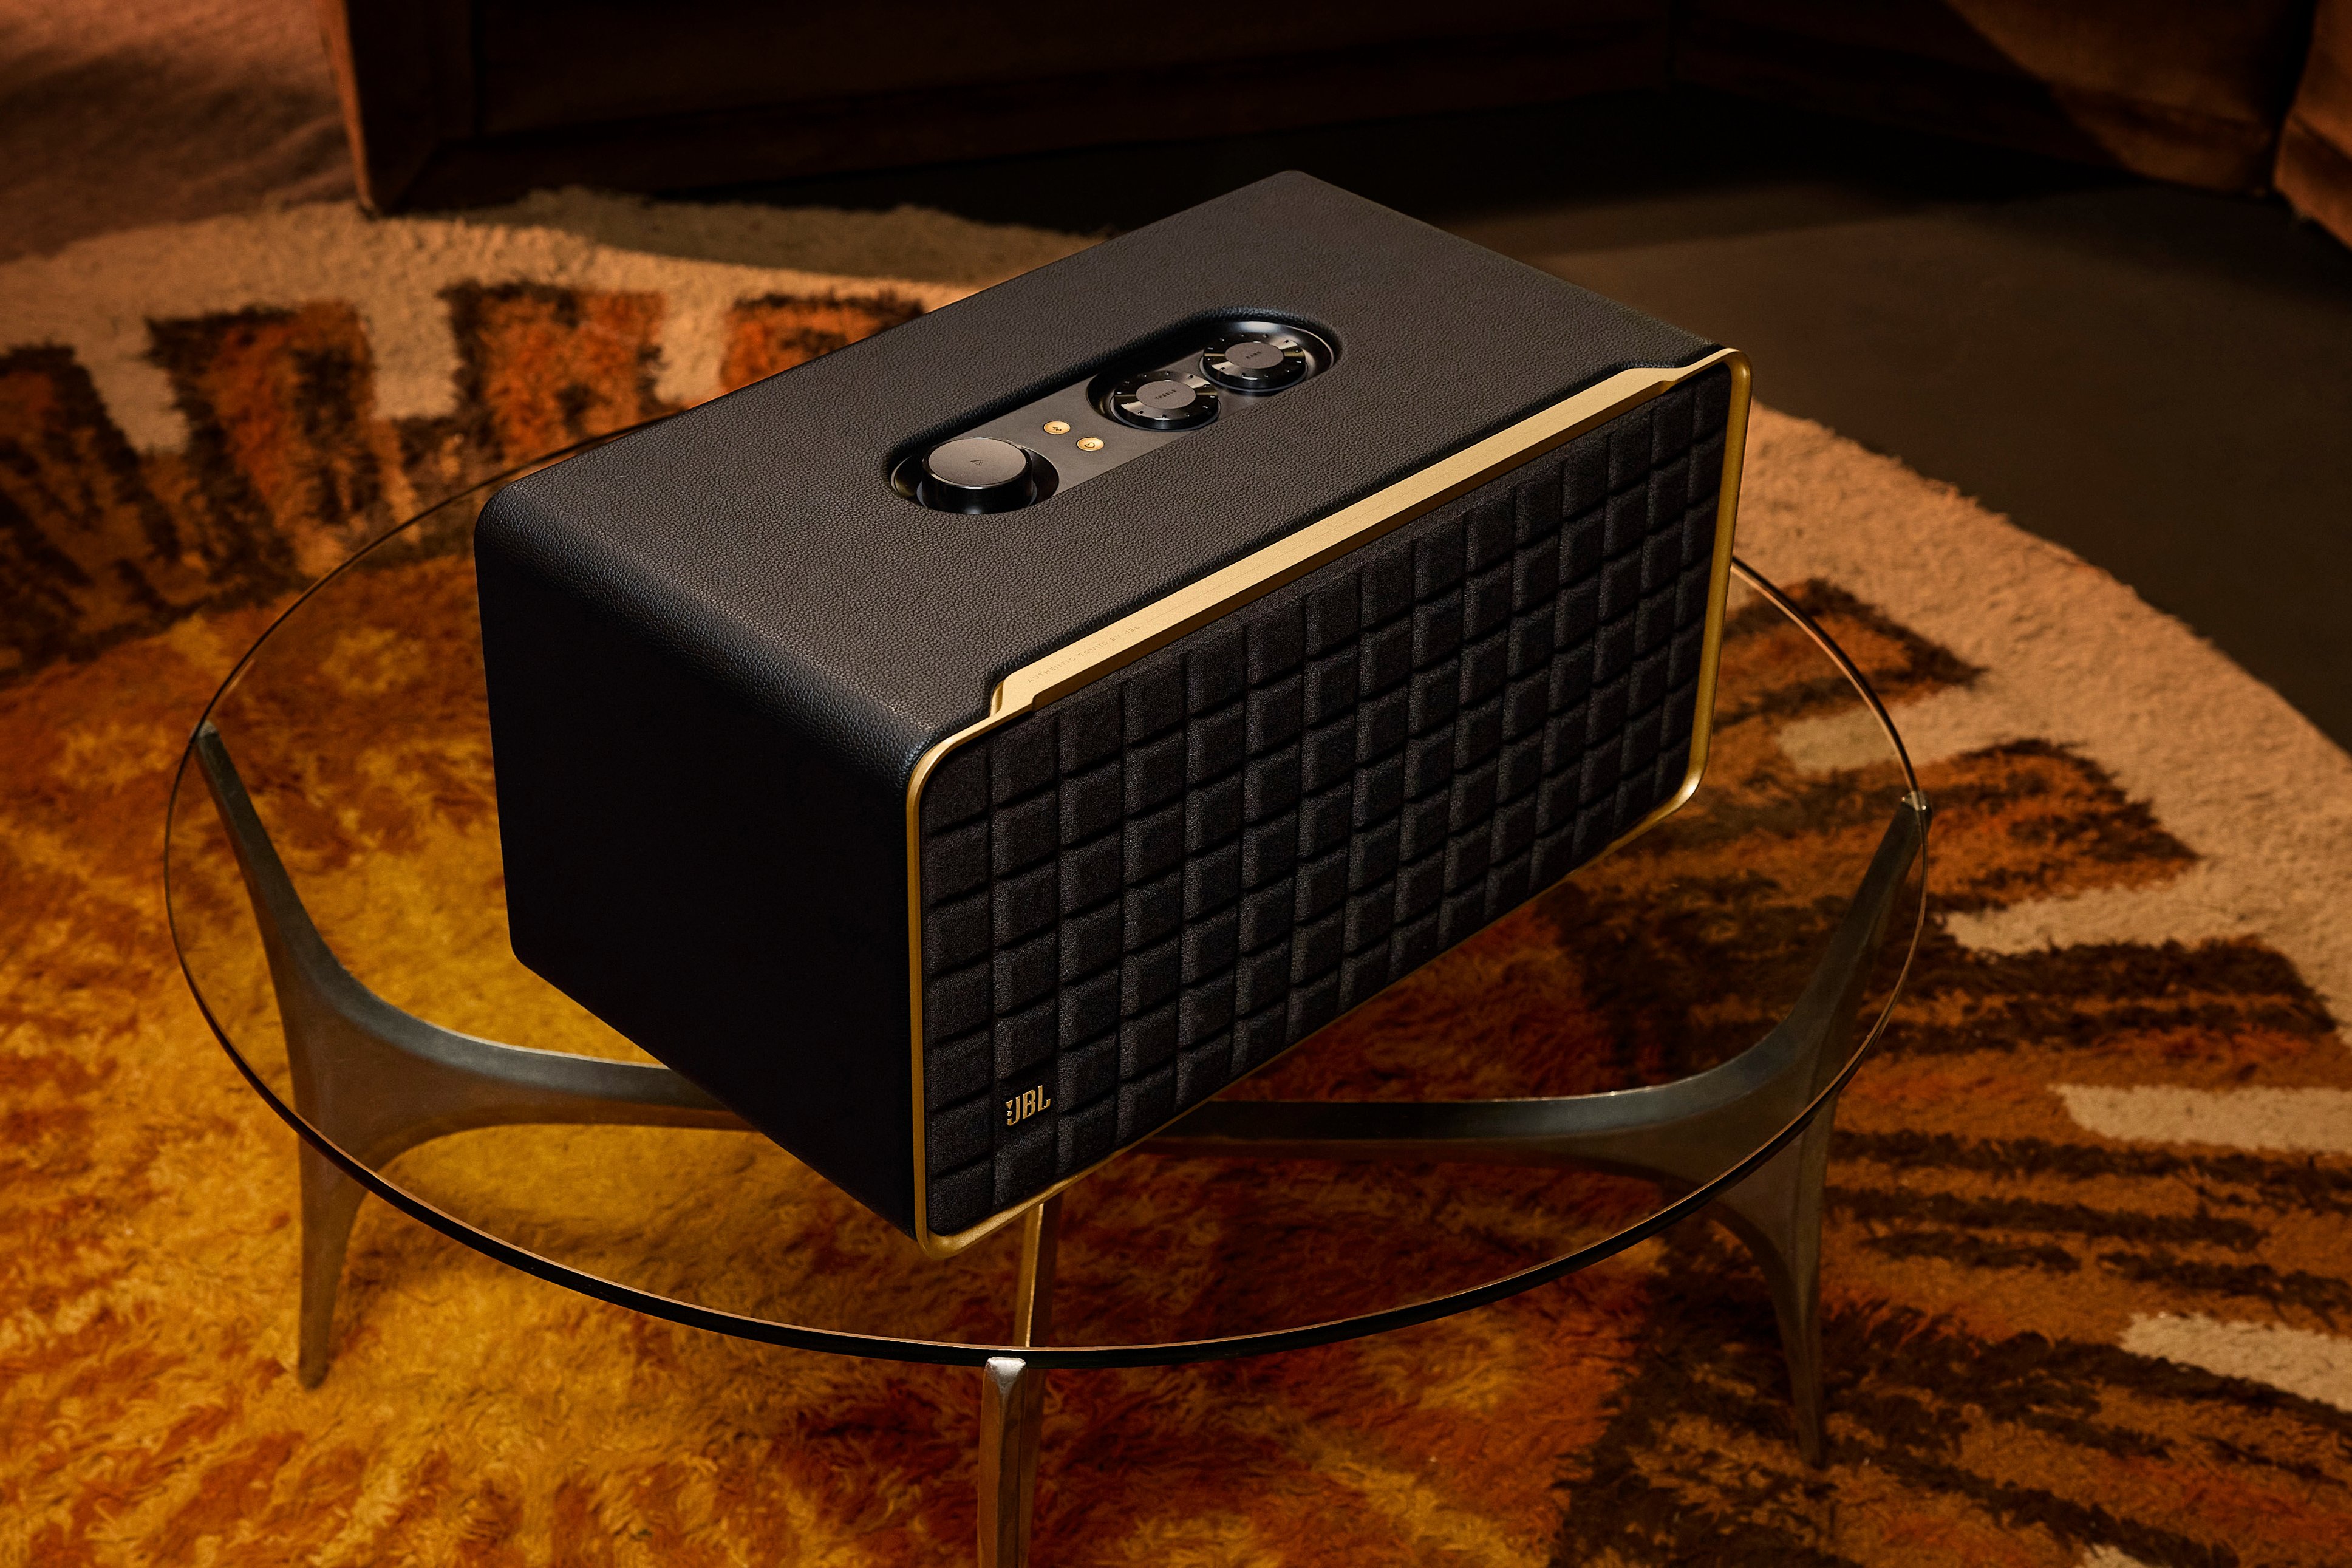 JBL Authentics 500 - Hi-Fidelity Smart Home Speaker with Retro Design